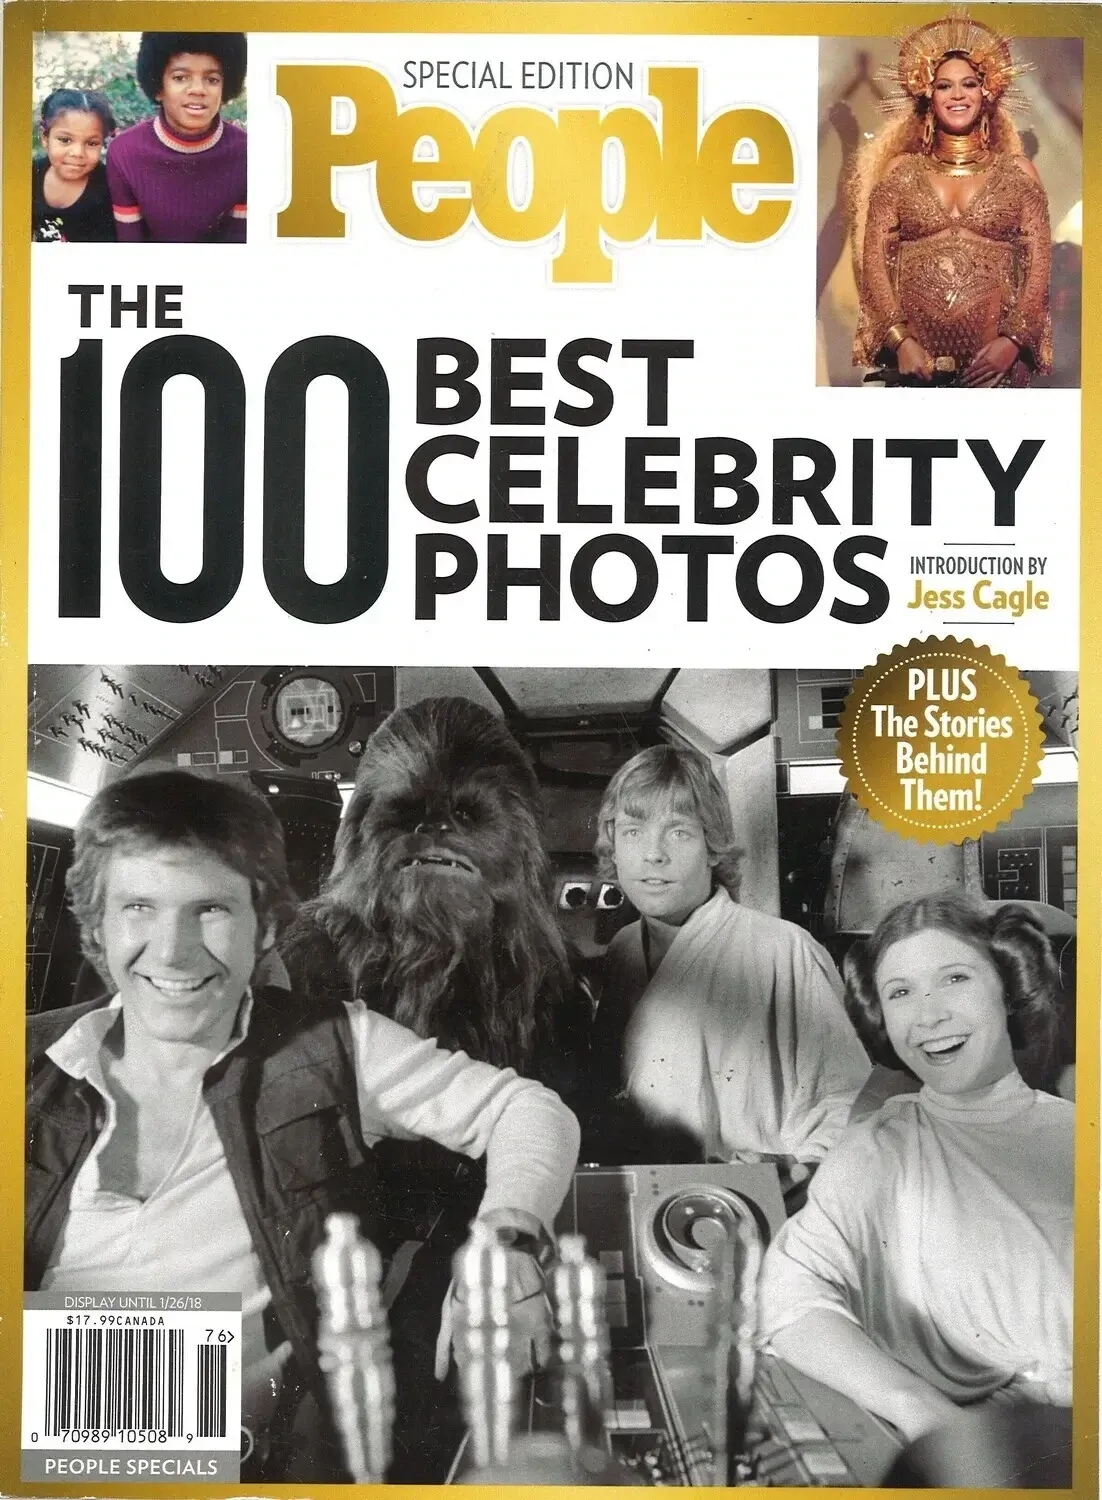 People - Magazine : The 100 Best Celebrity Photos